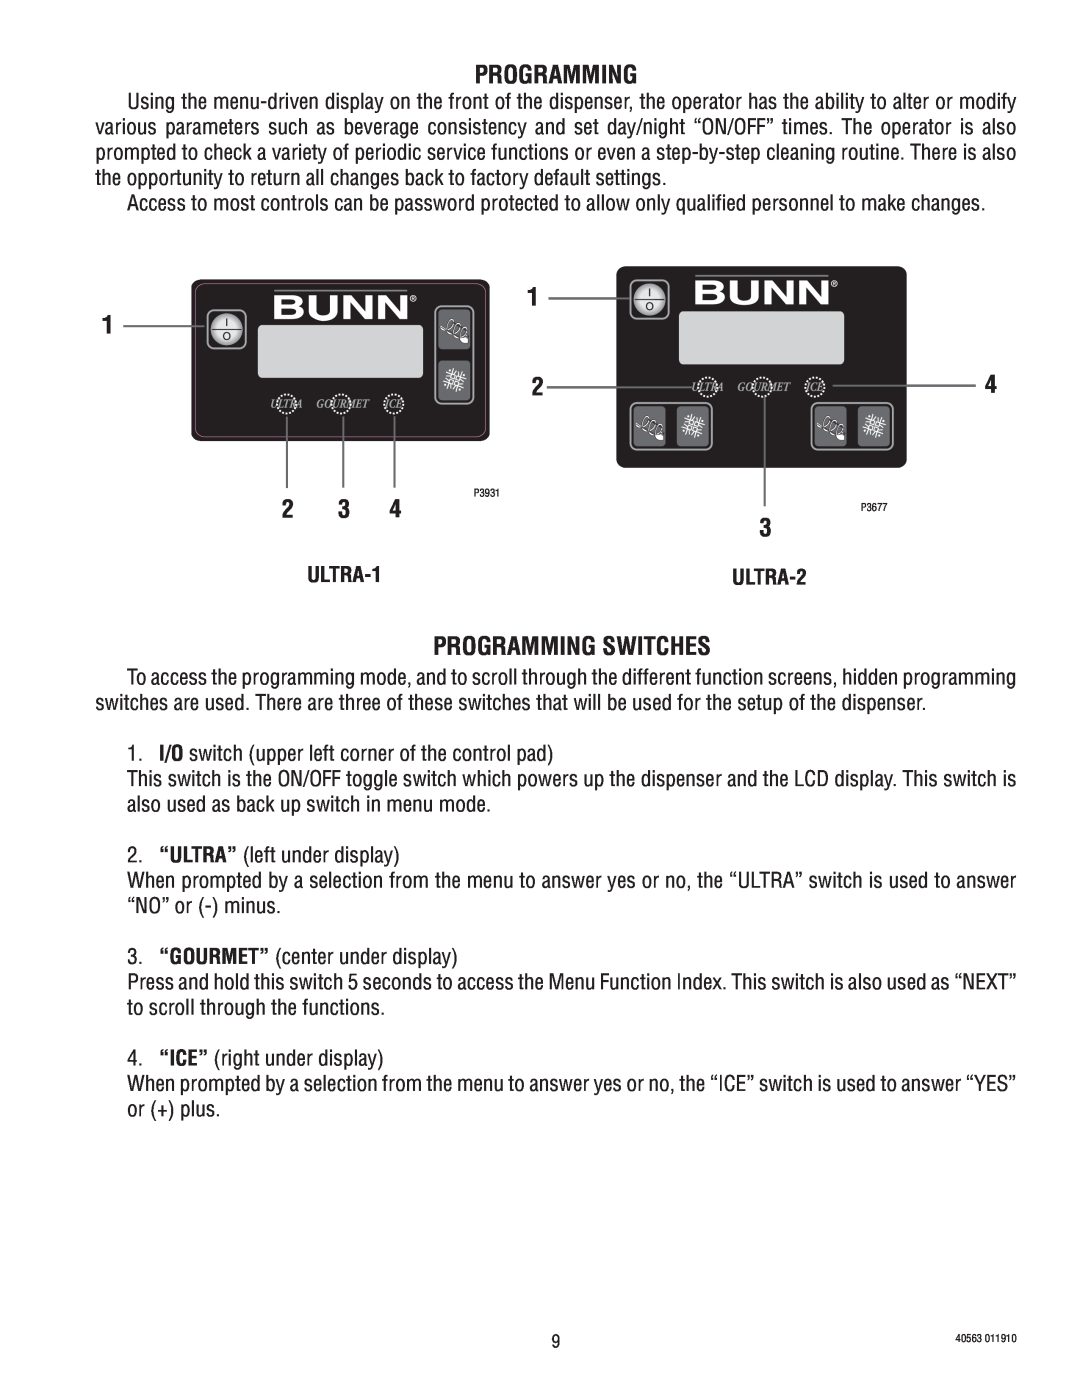 Bunn ULTRA-1 service manual Programming Switches, ULTRA-2 